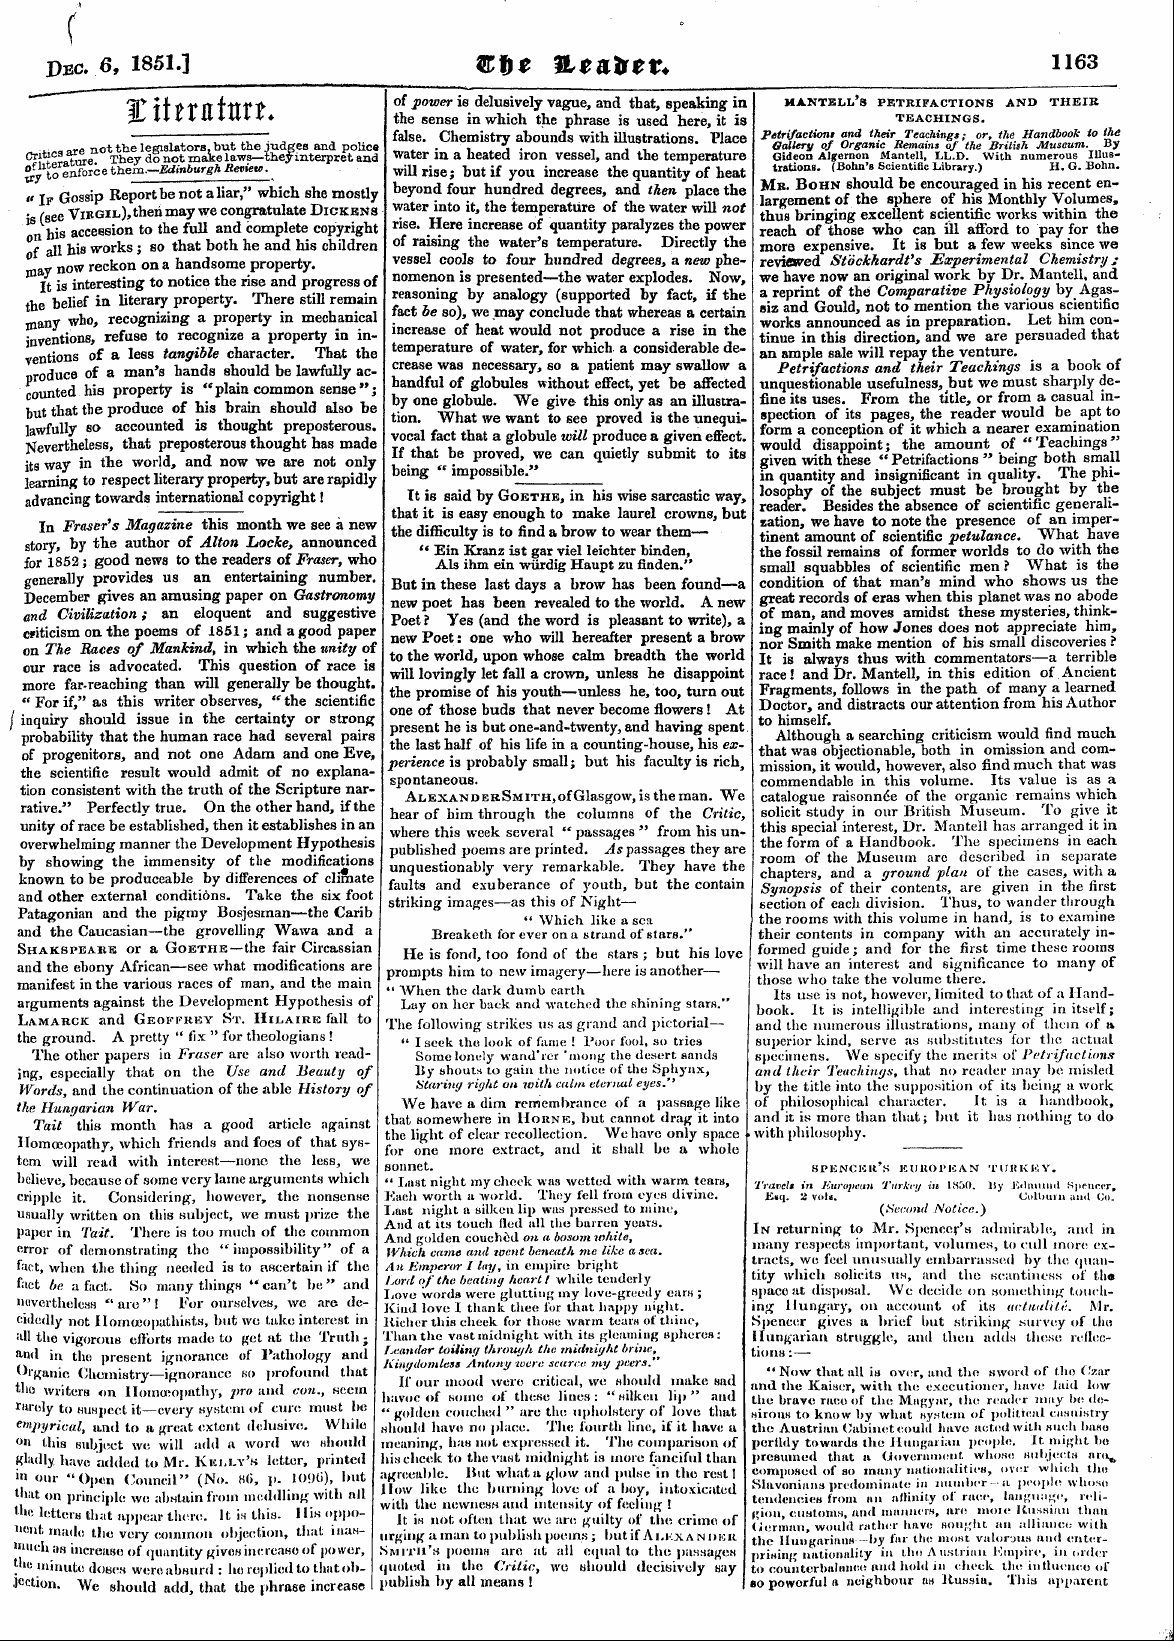 Leader (1850-1860): jS F Y, Country edition - Dec. 6, 1851.] K^T Vltatltv* 1163